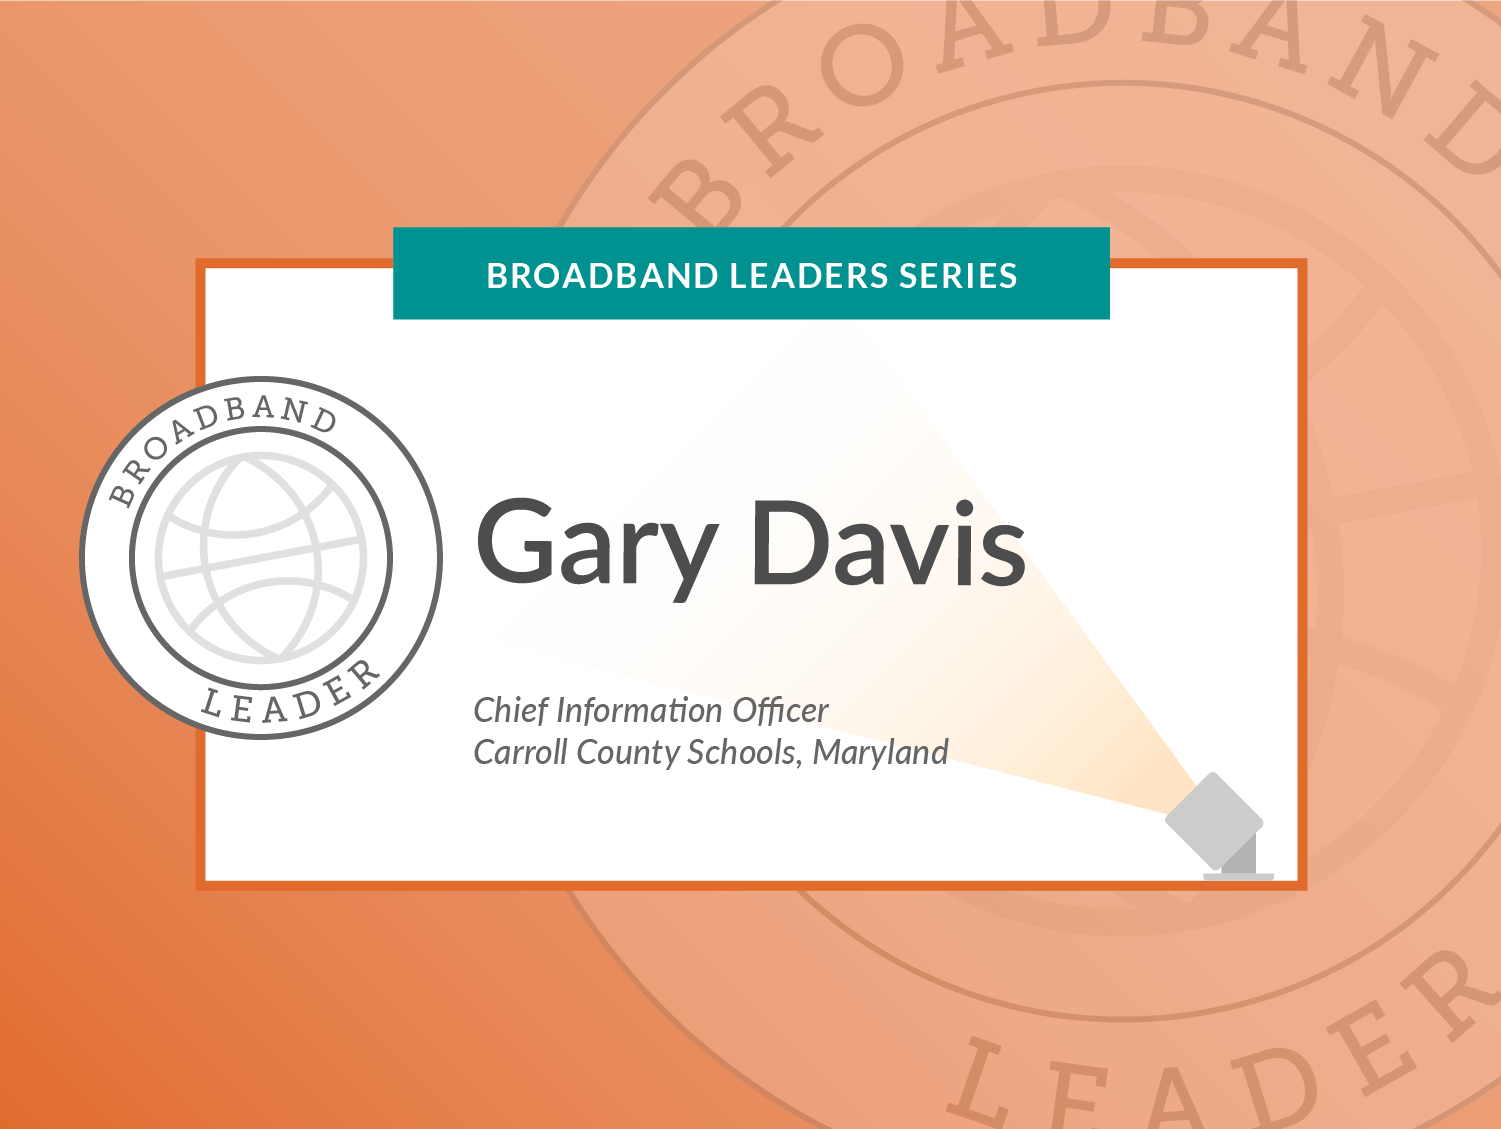 Broadband Leaders Series: Gary Davis, Chief Information Officer, Carroll County Schools, Maryland